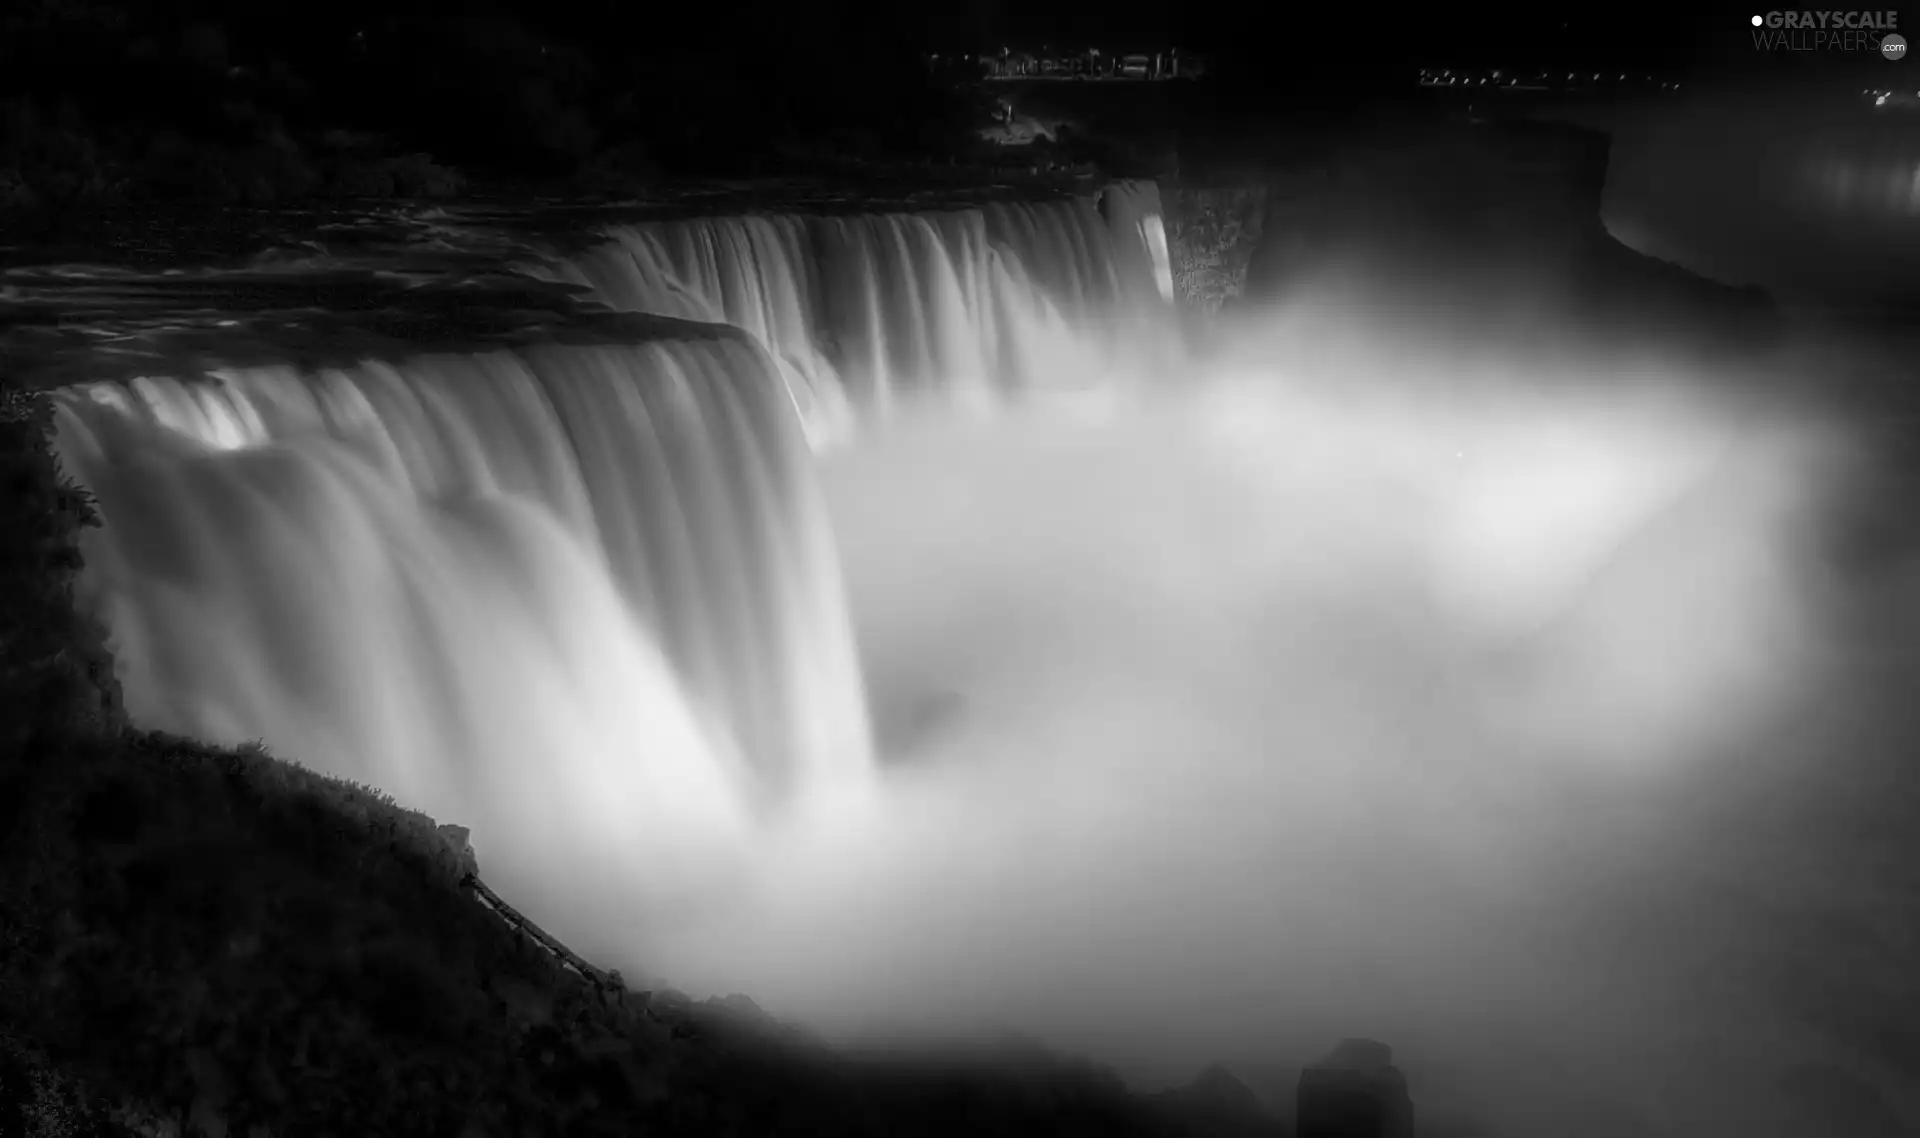 Illuminations, waterfall, Niagara Falls